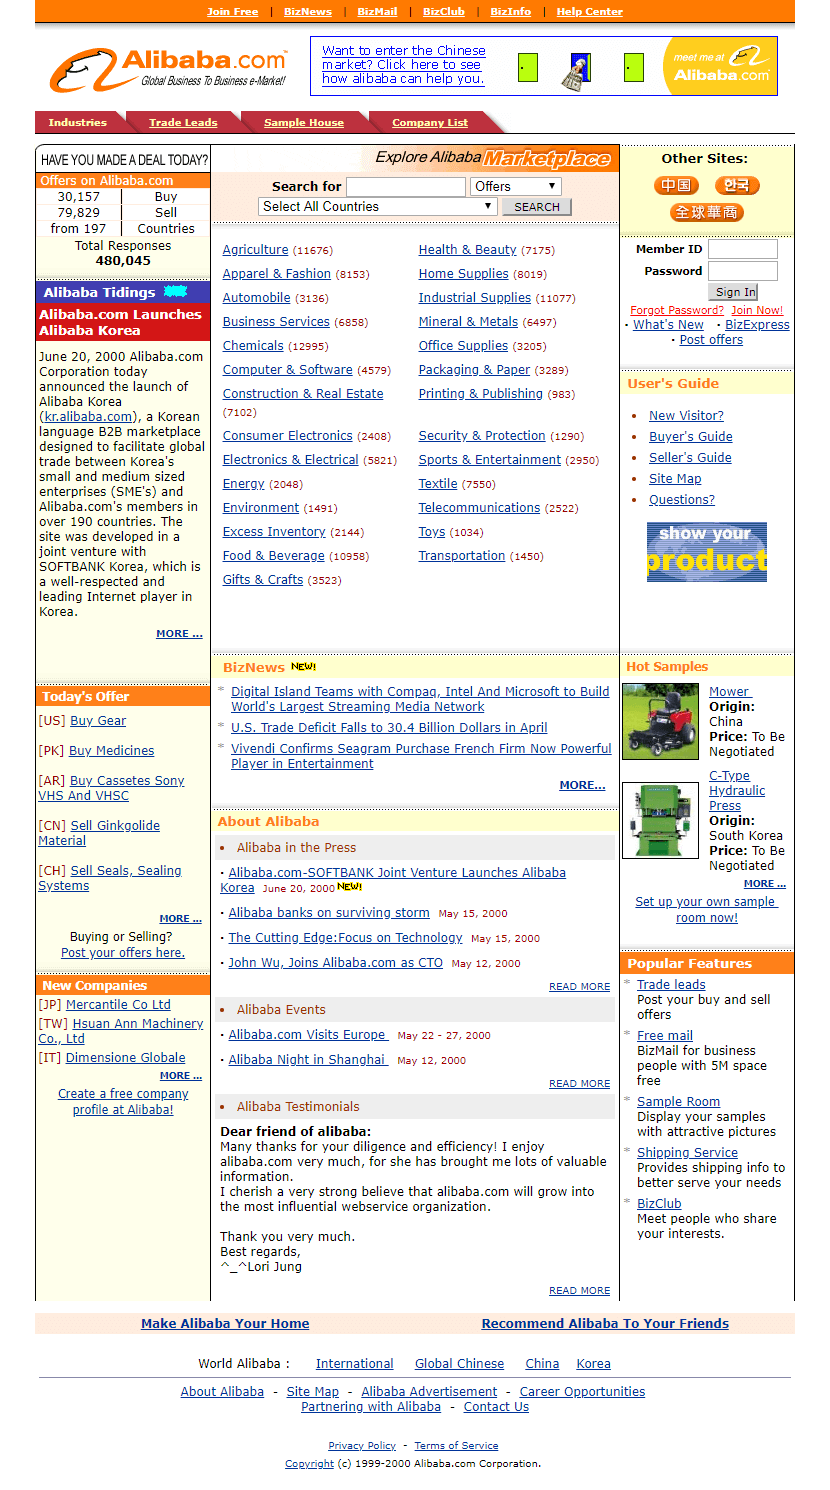 Alibaba website in 2000